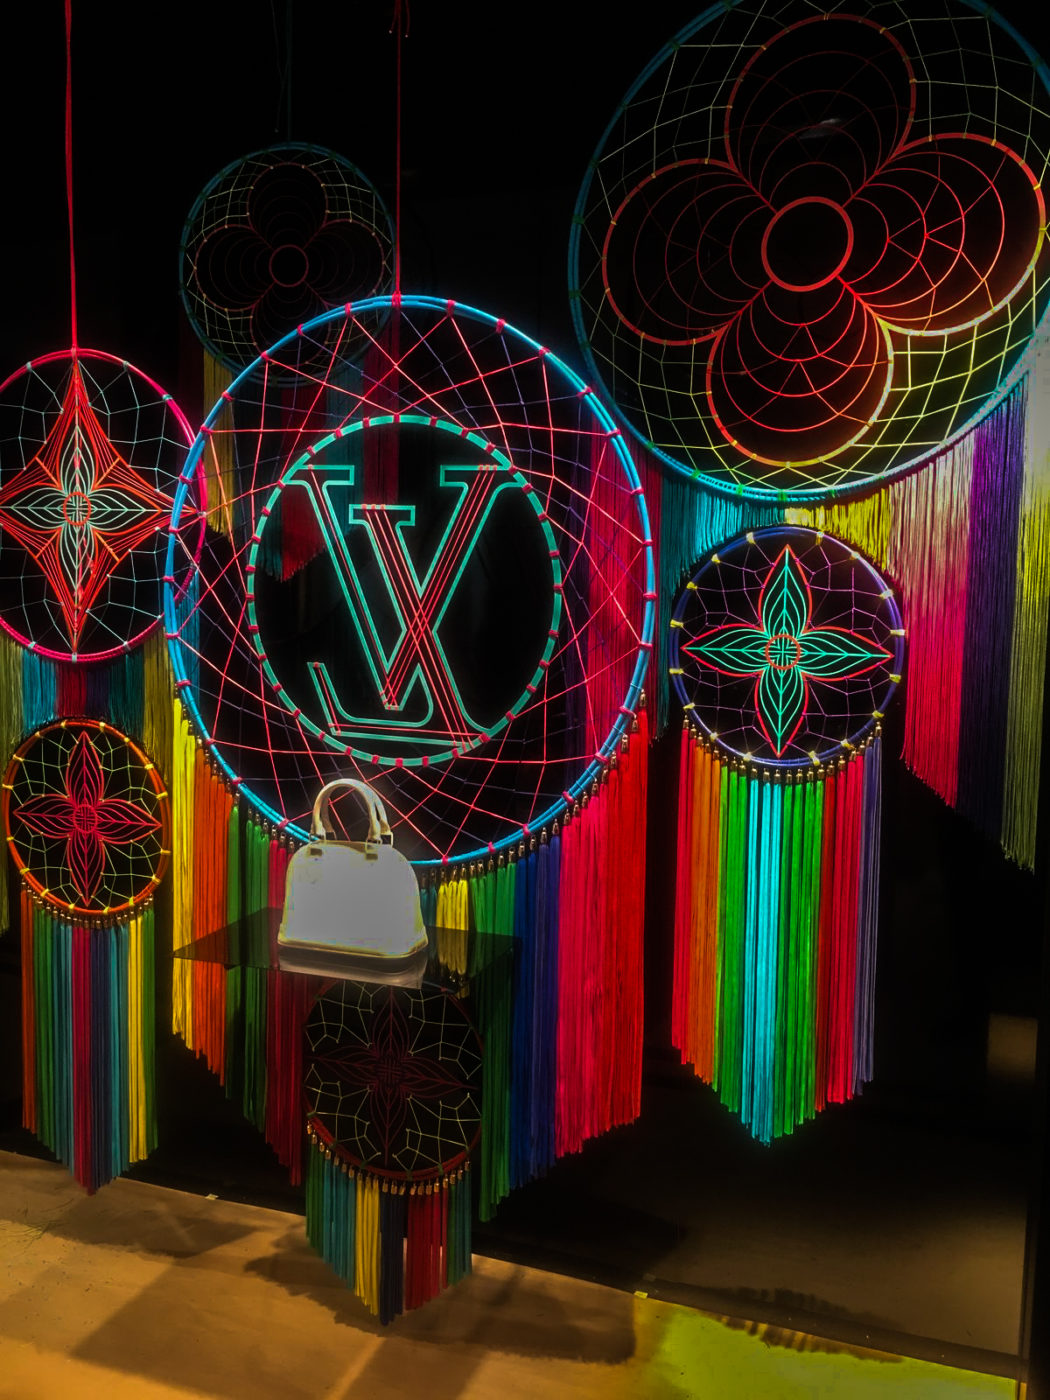 Louis Vuitton Yayoi Kusama Stores Pop Up Around the World